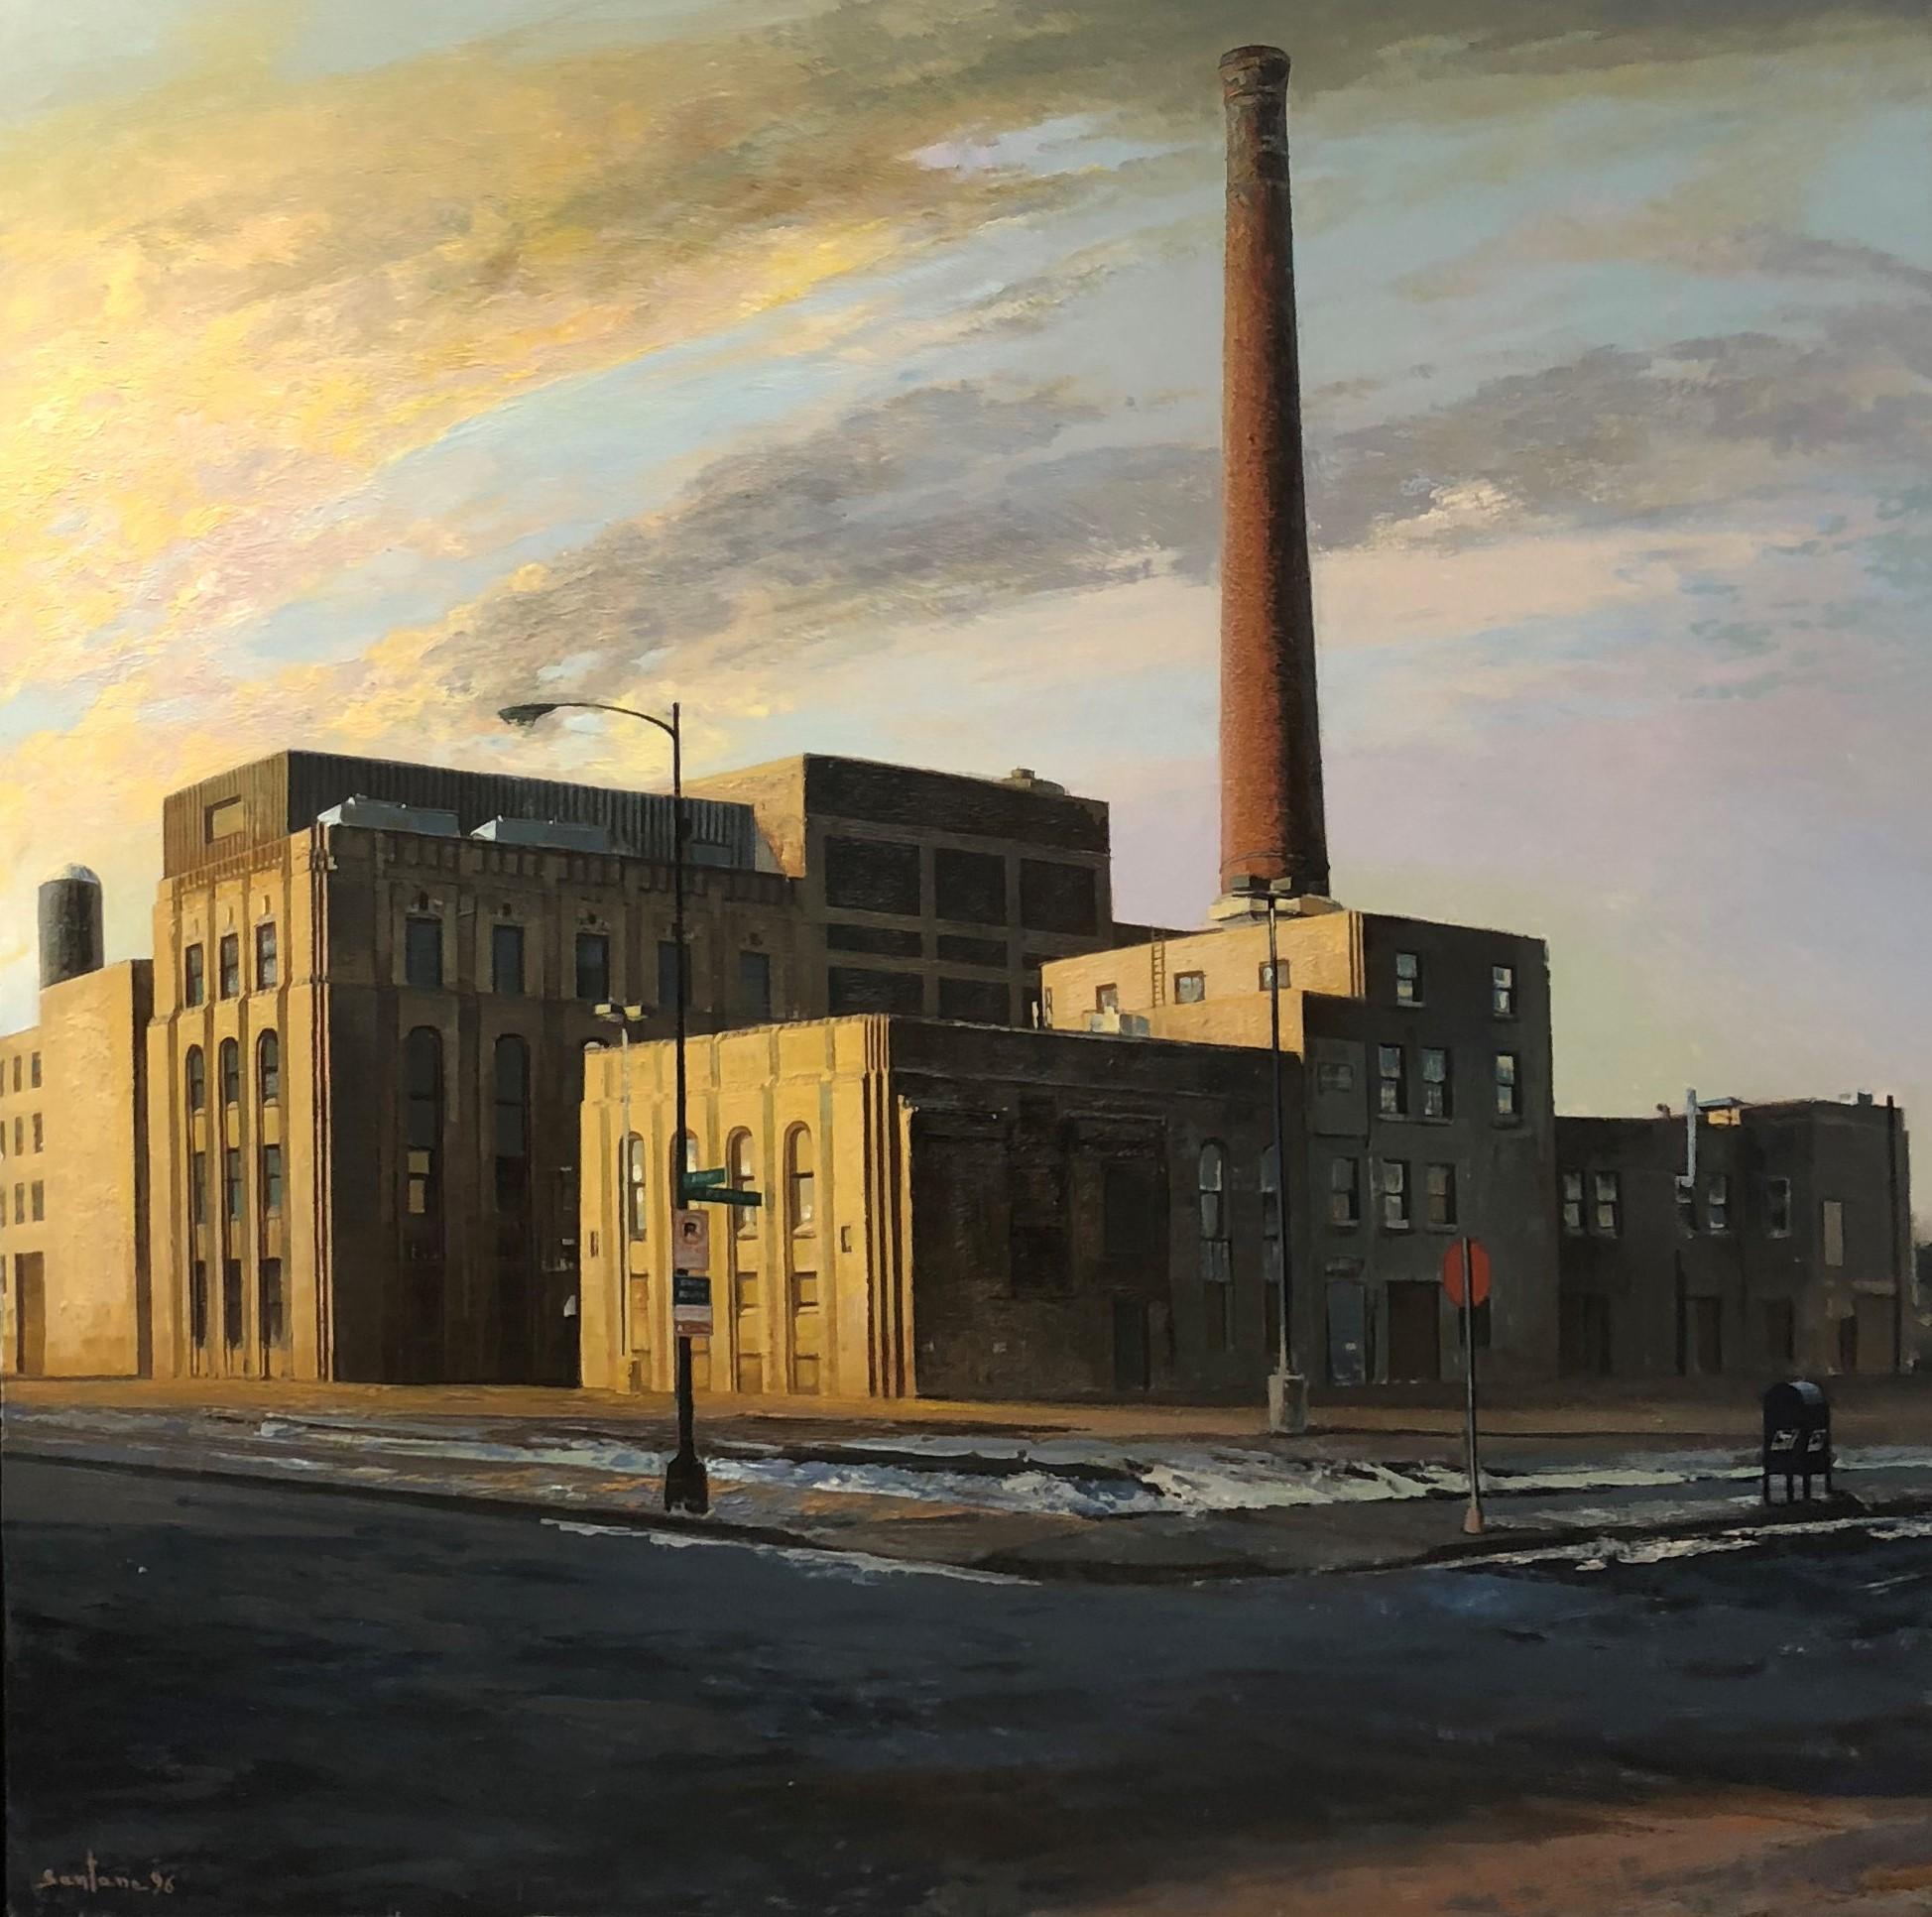 Enrique Santana Landscape Painting - Peoria & Adams, Chicago's West Loop Neighborhood, Urban Landscape, Oil on Linen